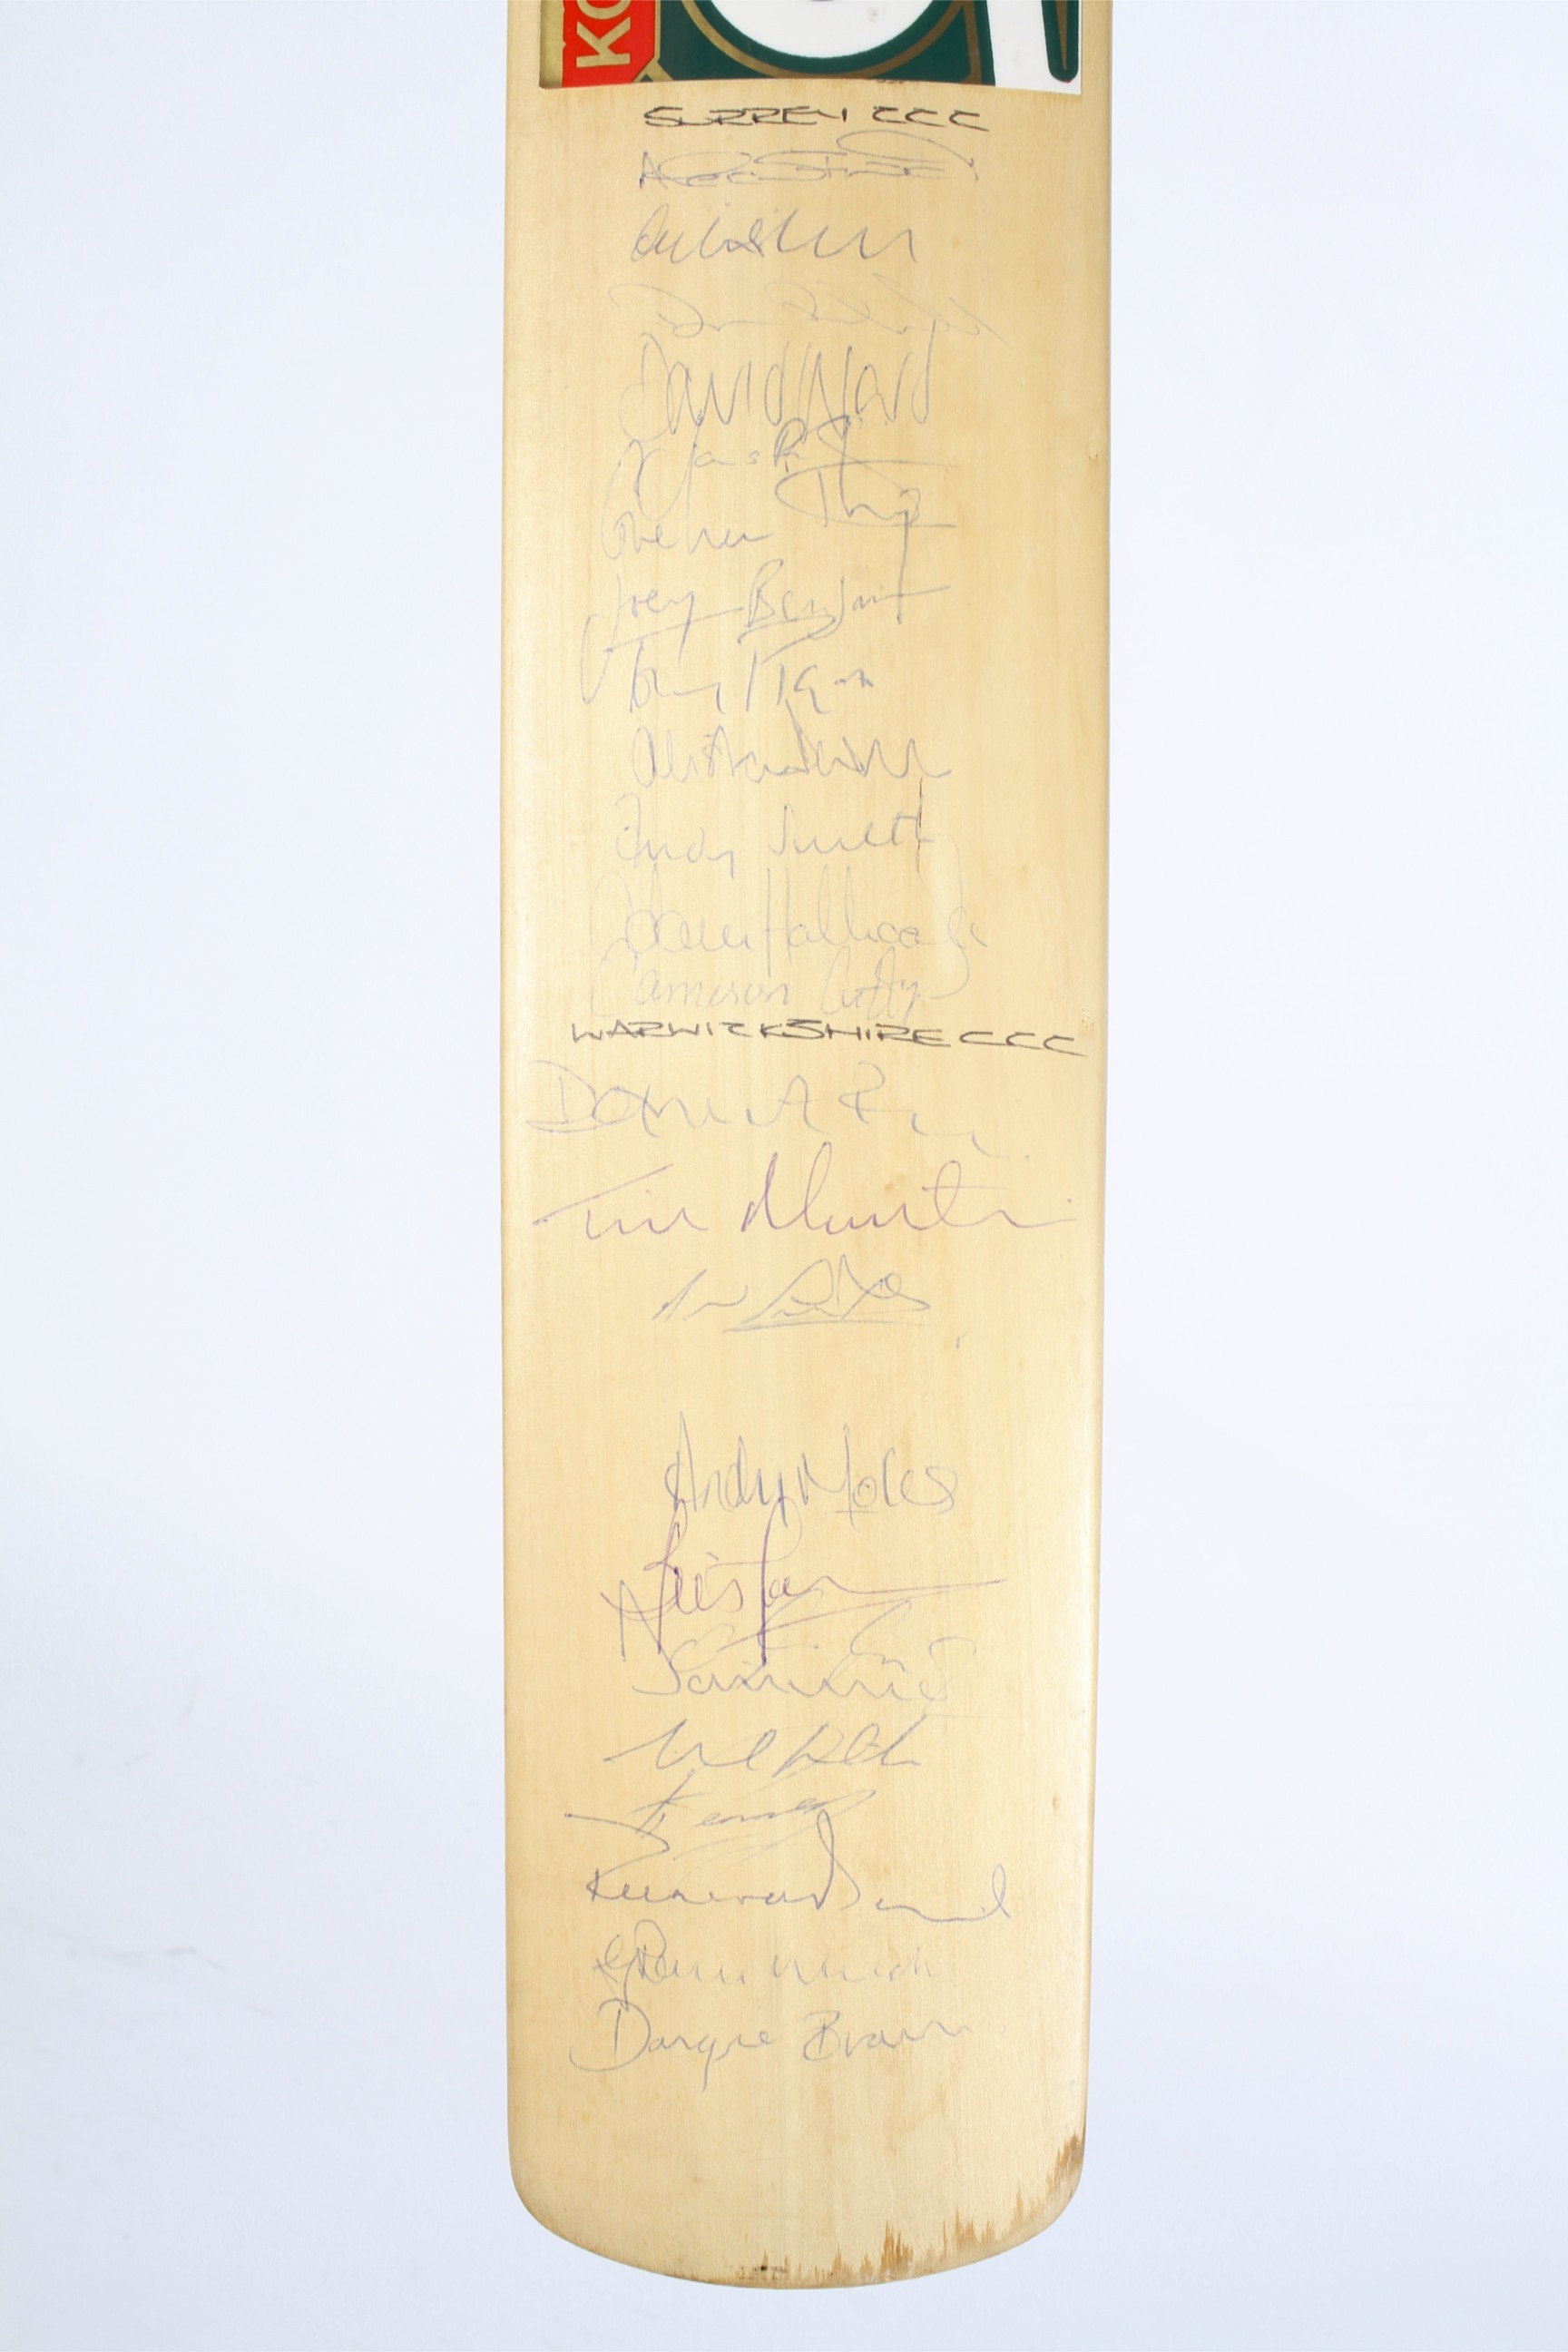 A Surrey County Cricket Club signed cricket bat - Image 2 of 2